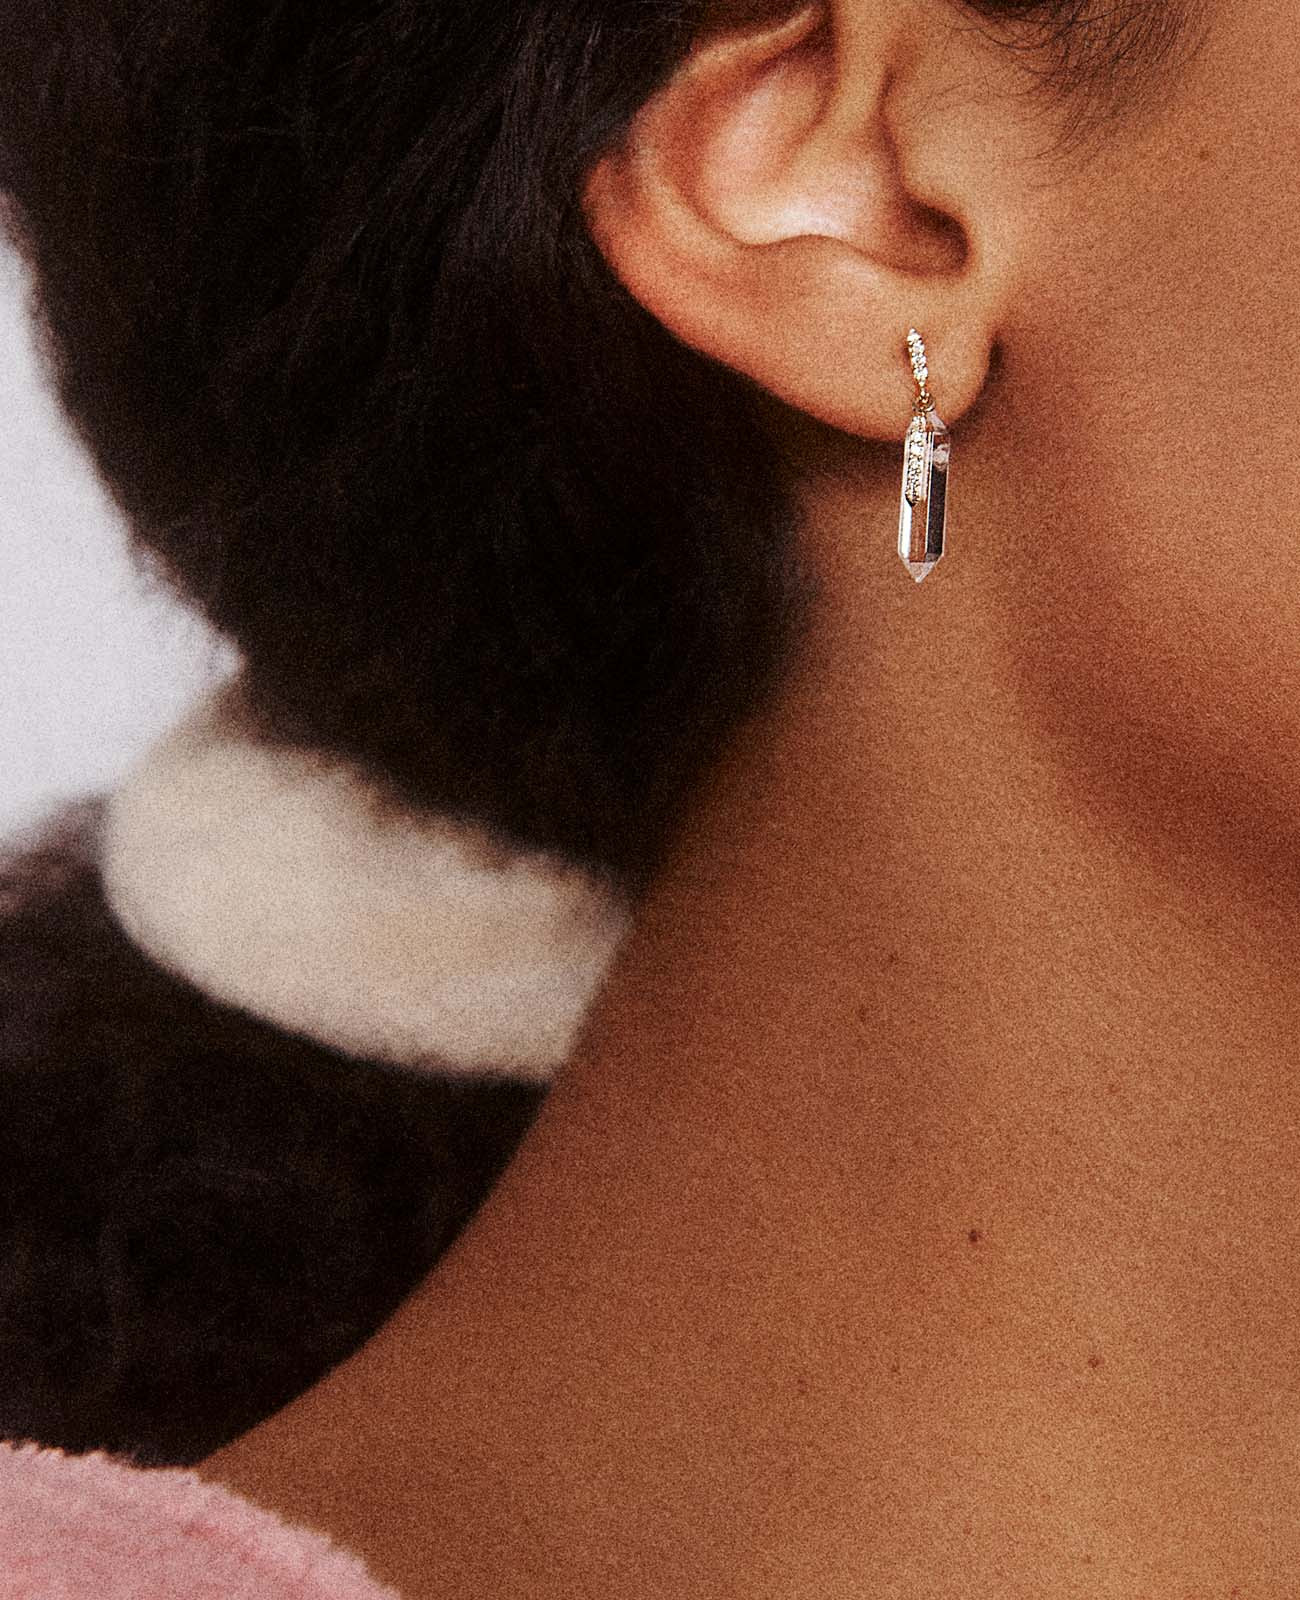 MOON N°2 earring pascale monvoisin jewelry paris